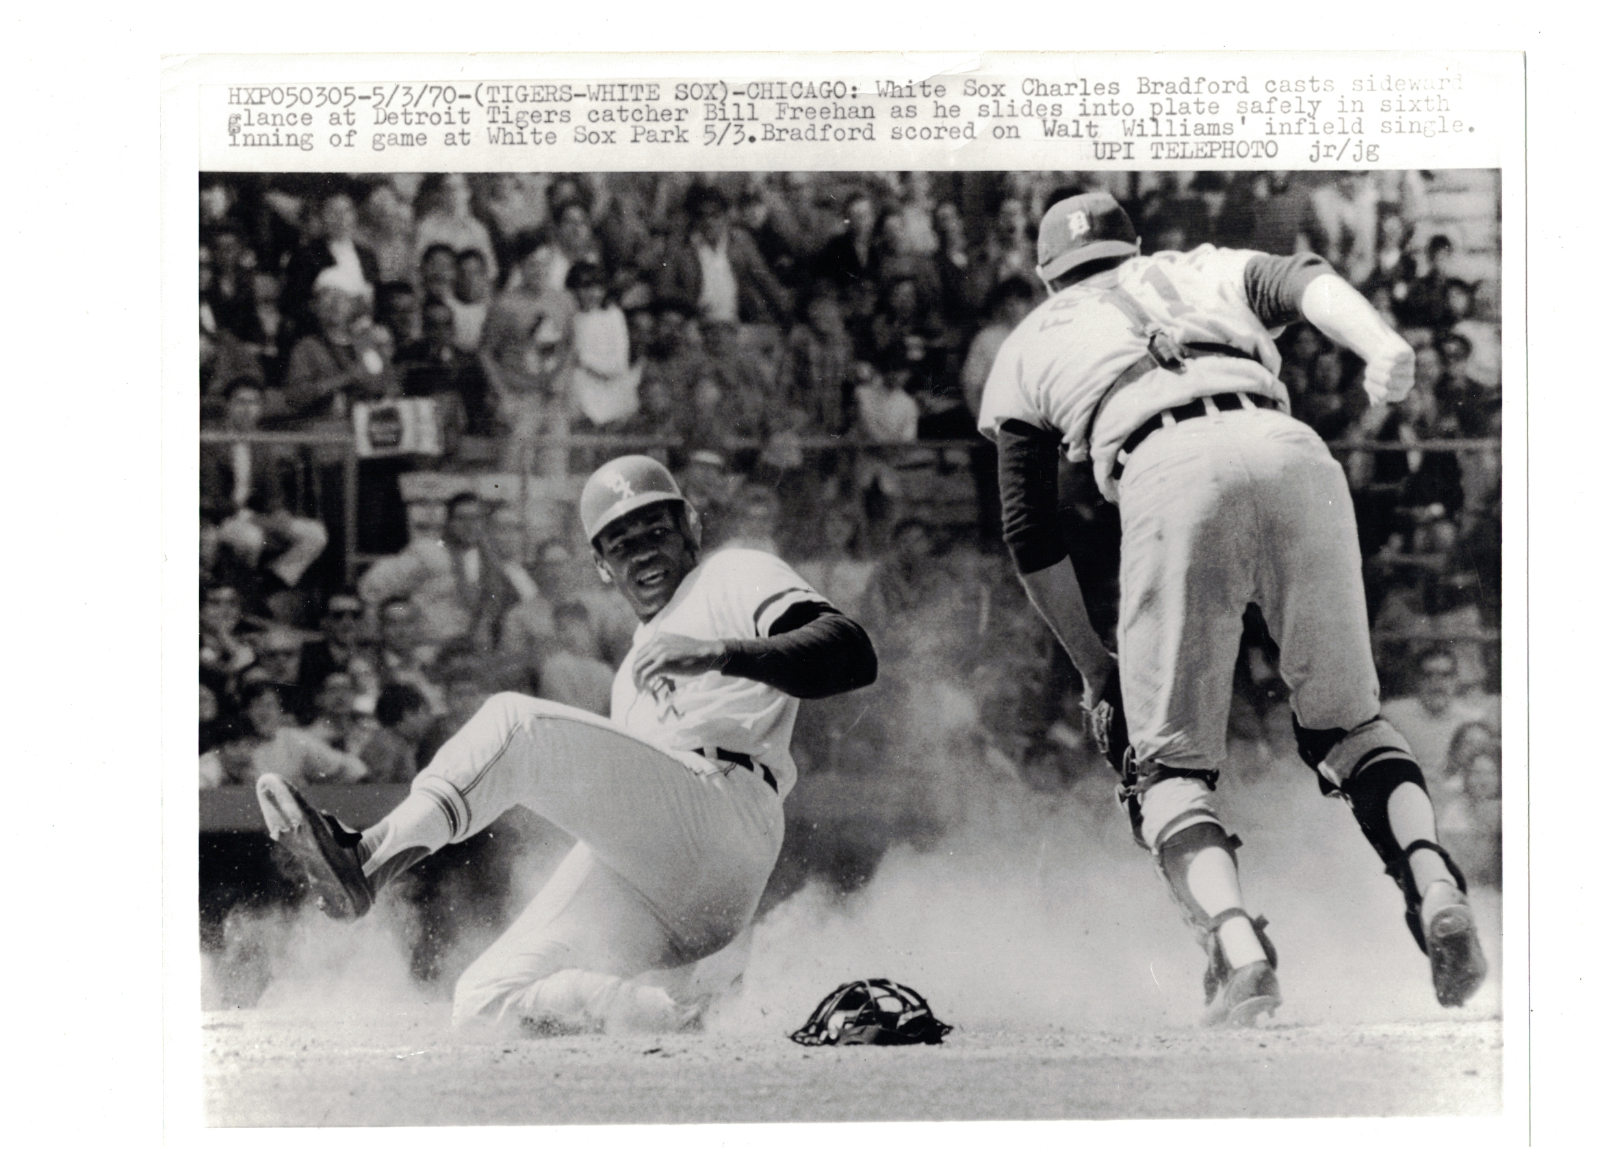 Buddy Bradford Chicago White Sox Bill han 1970 UPI Tele Press Photo Poster painting RH1